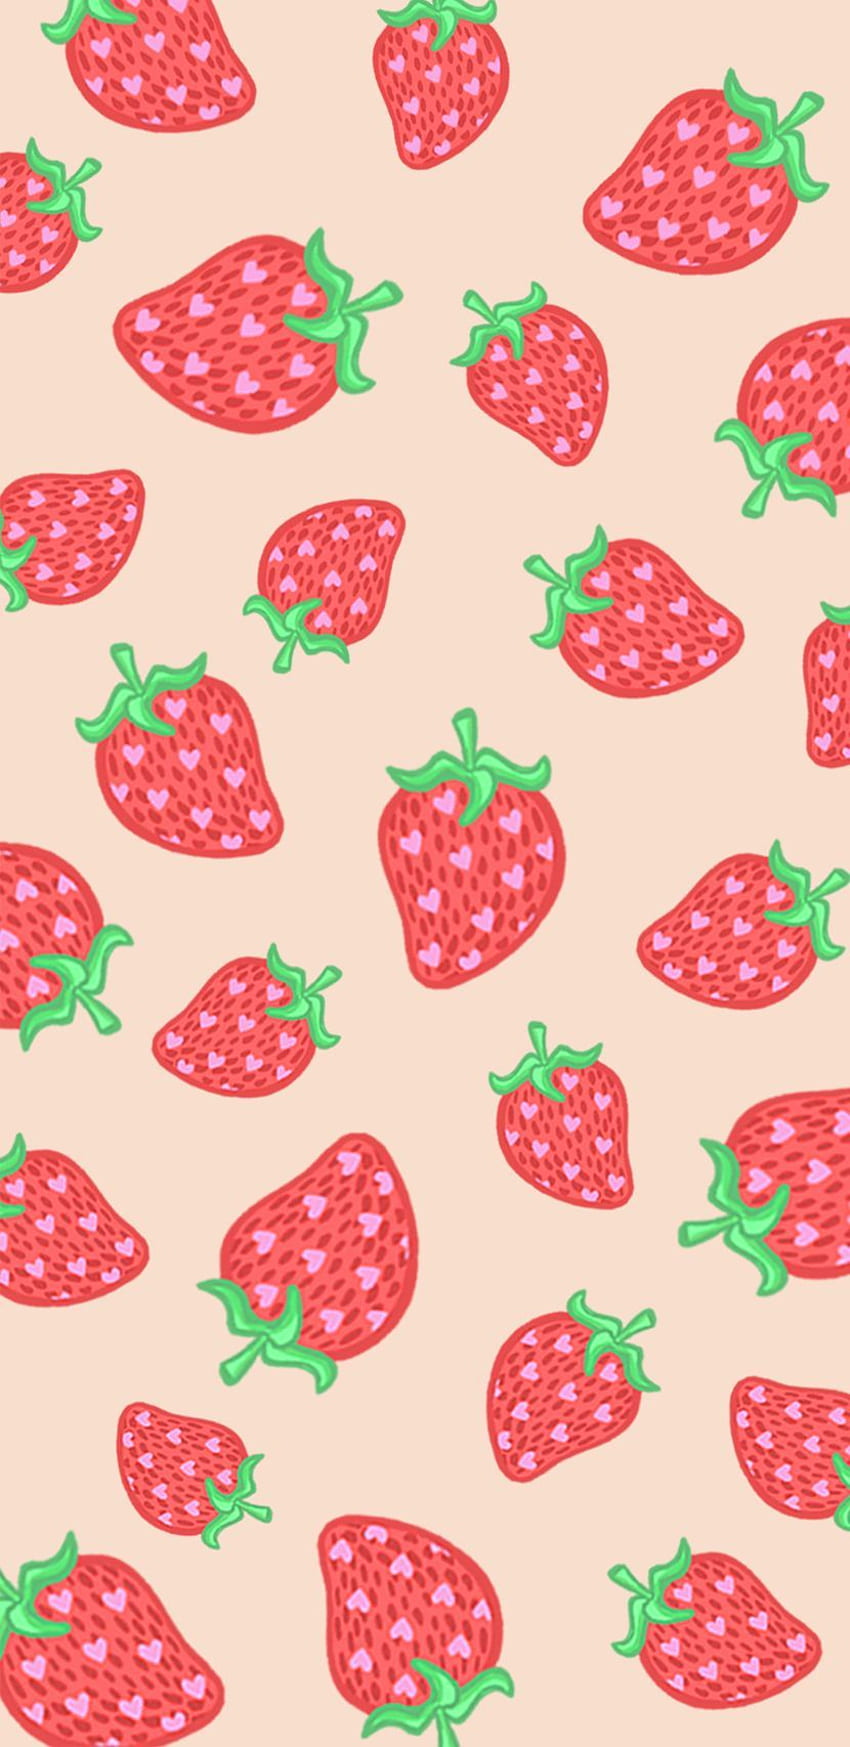 Strawberries IPhone Wallpaper  IPhone Wallpapers  iPhone Wallpapers